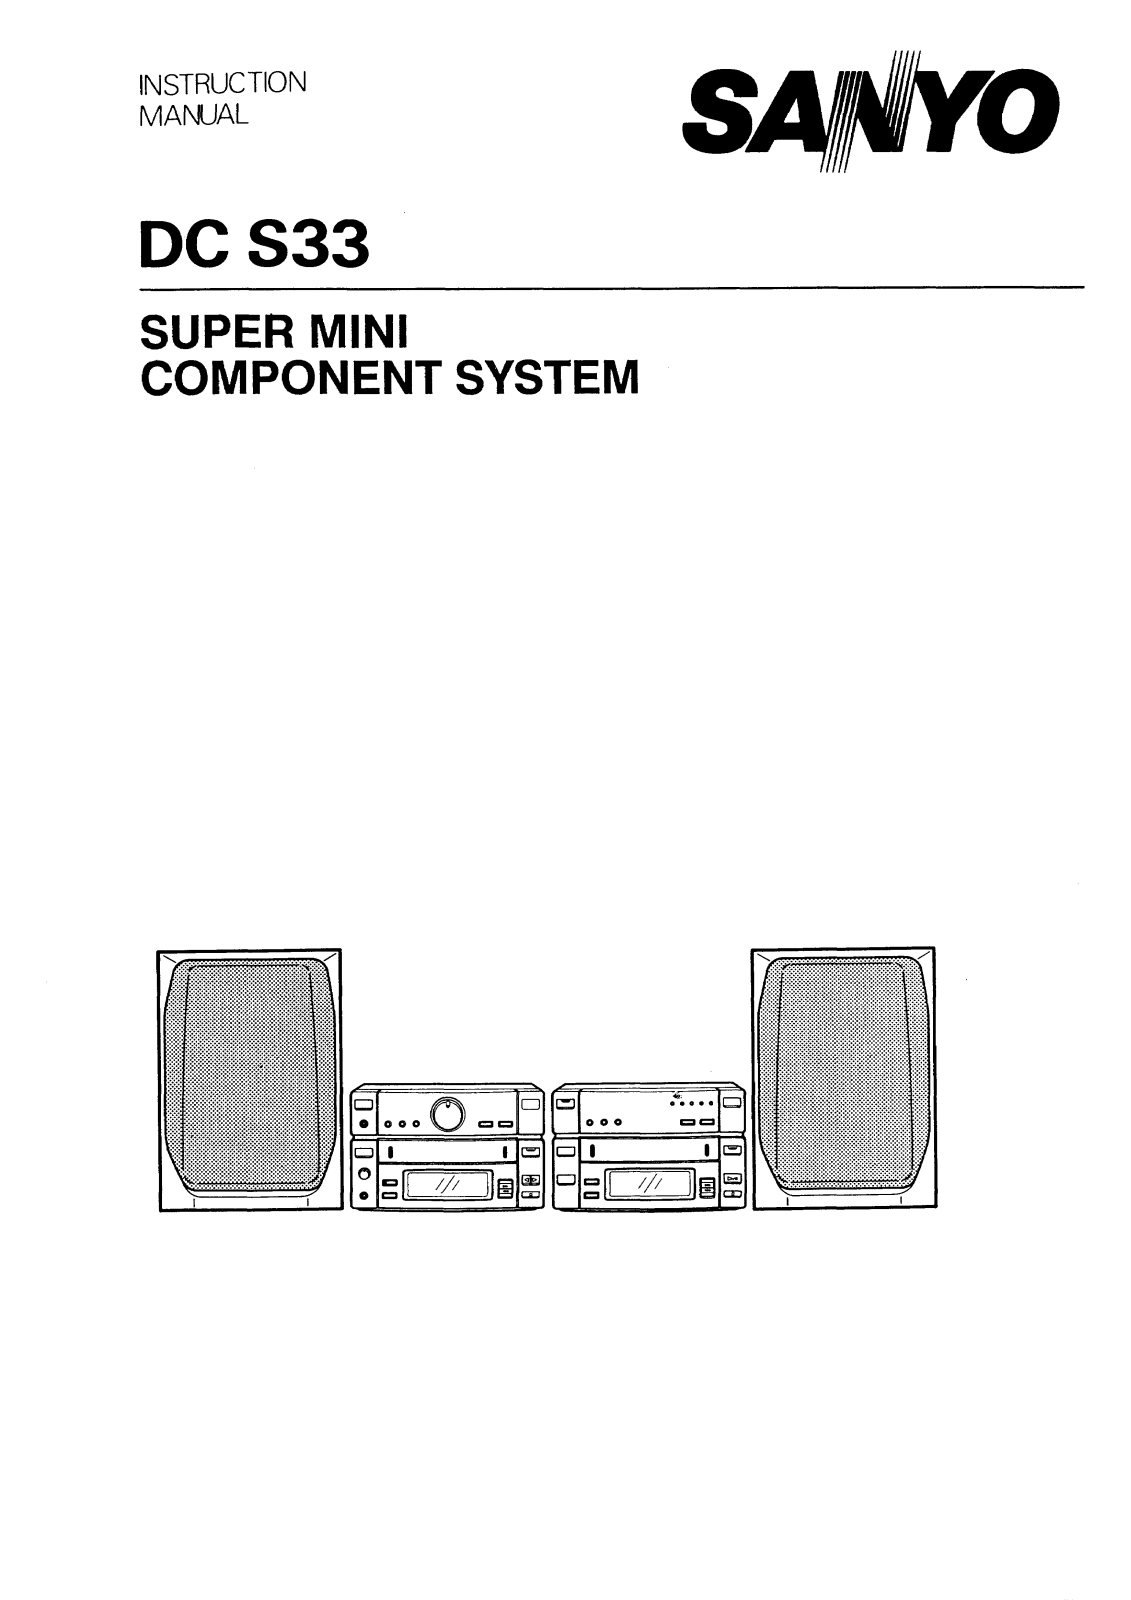 Sanyo DC S33 Instruction Manual